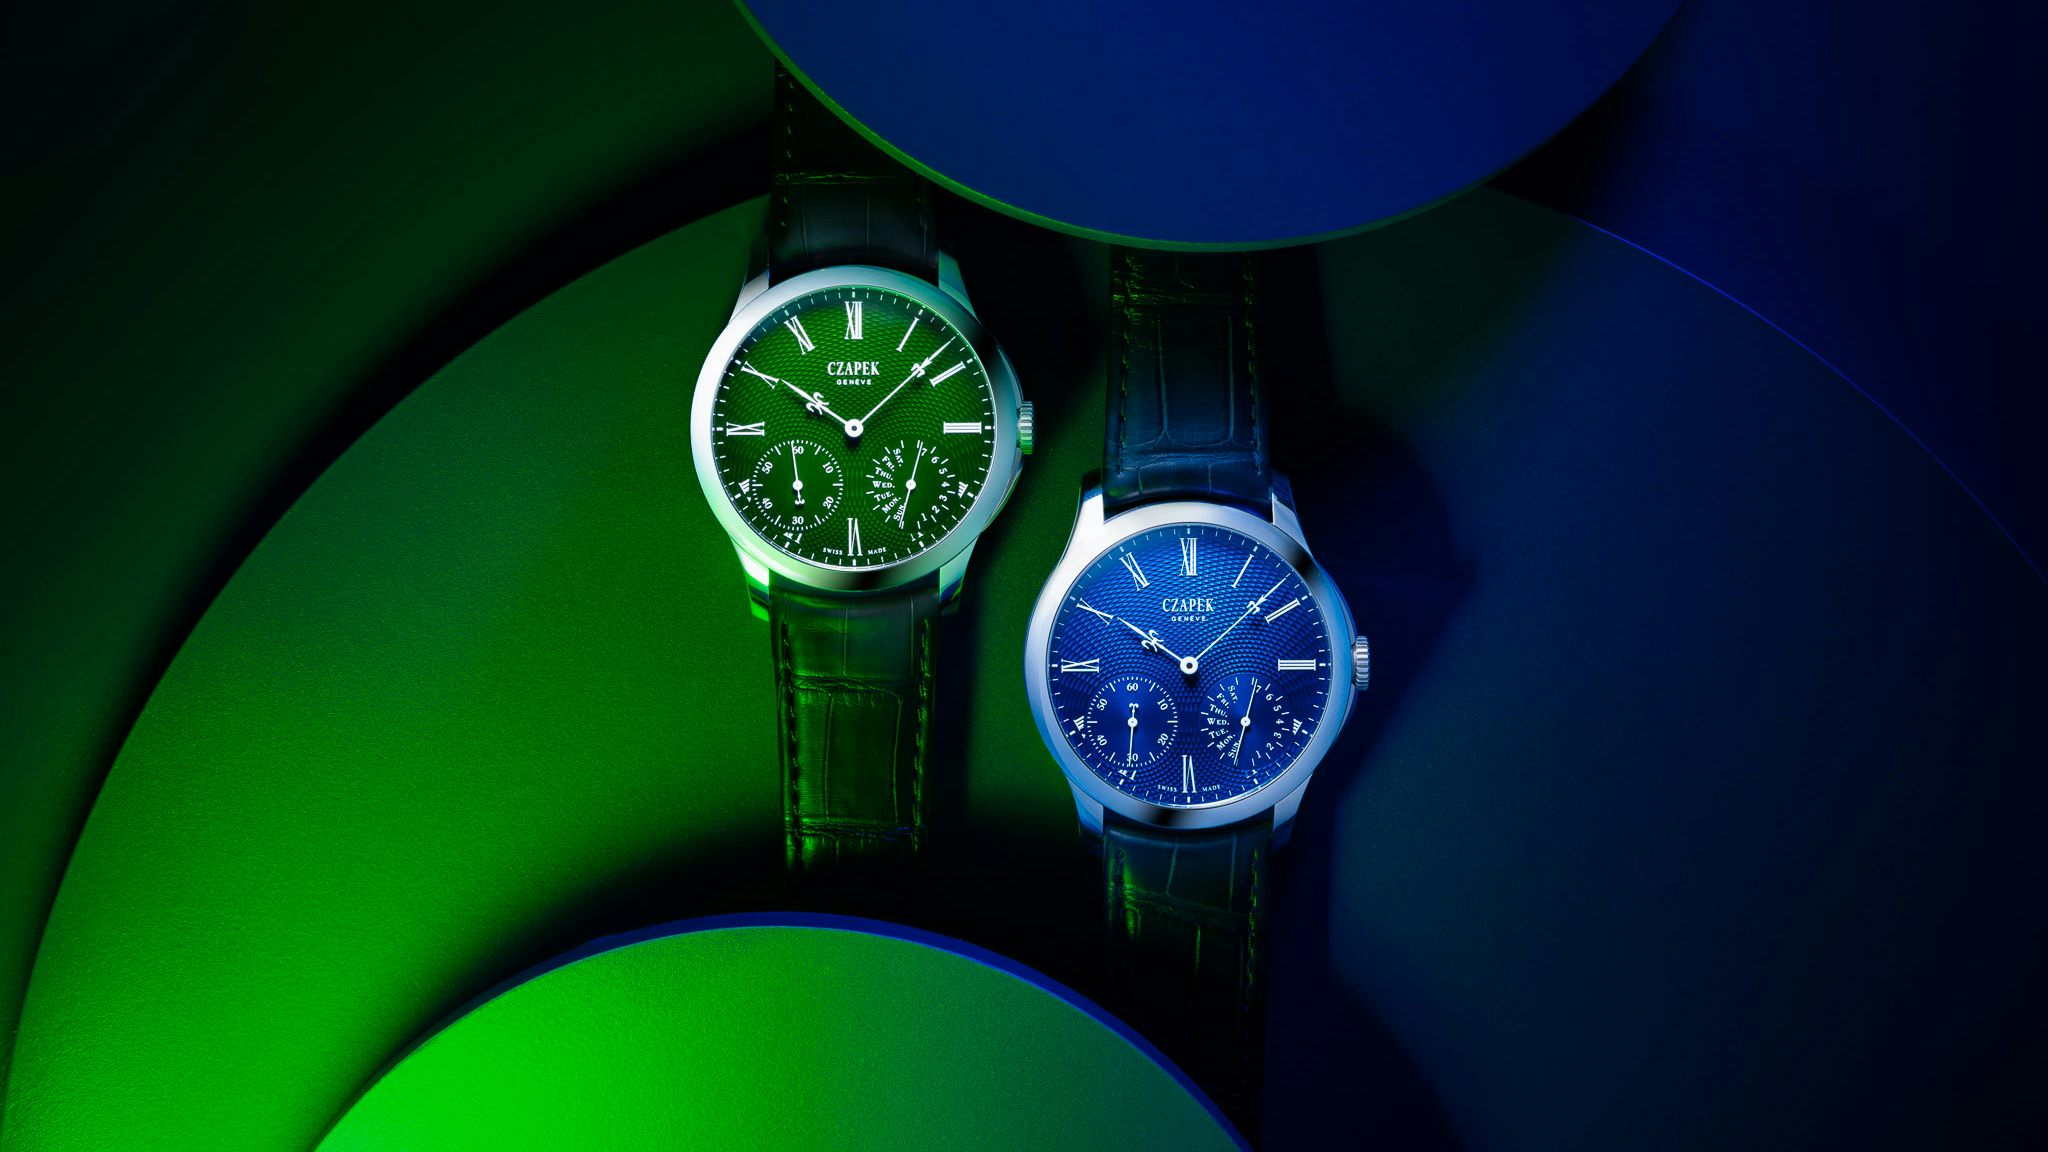 HODINKEE's Favourite Watches From Geneva Watch Days 2022